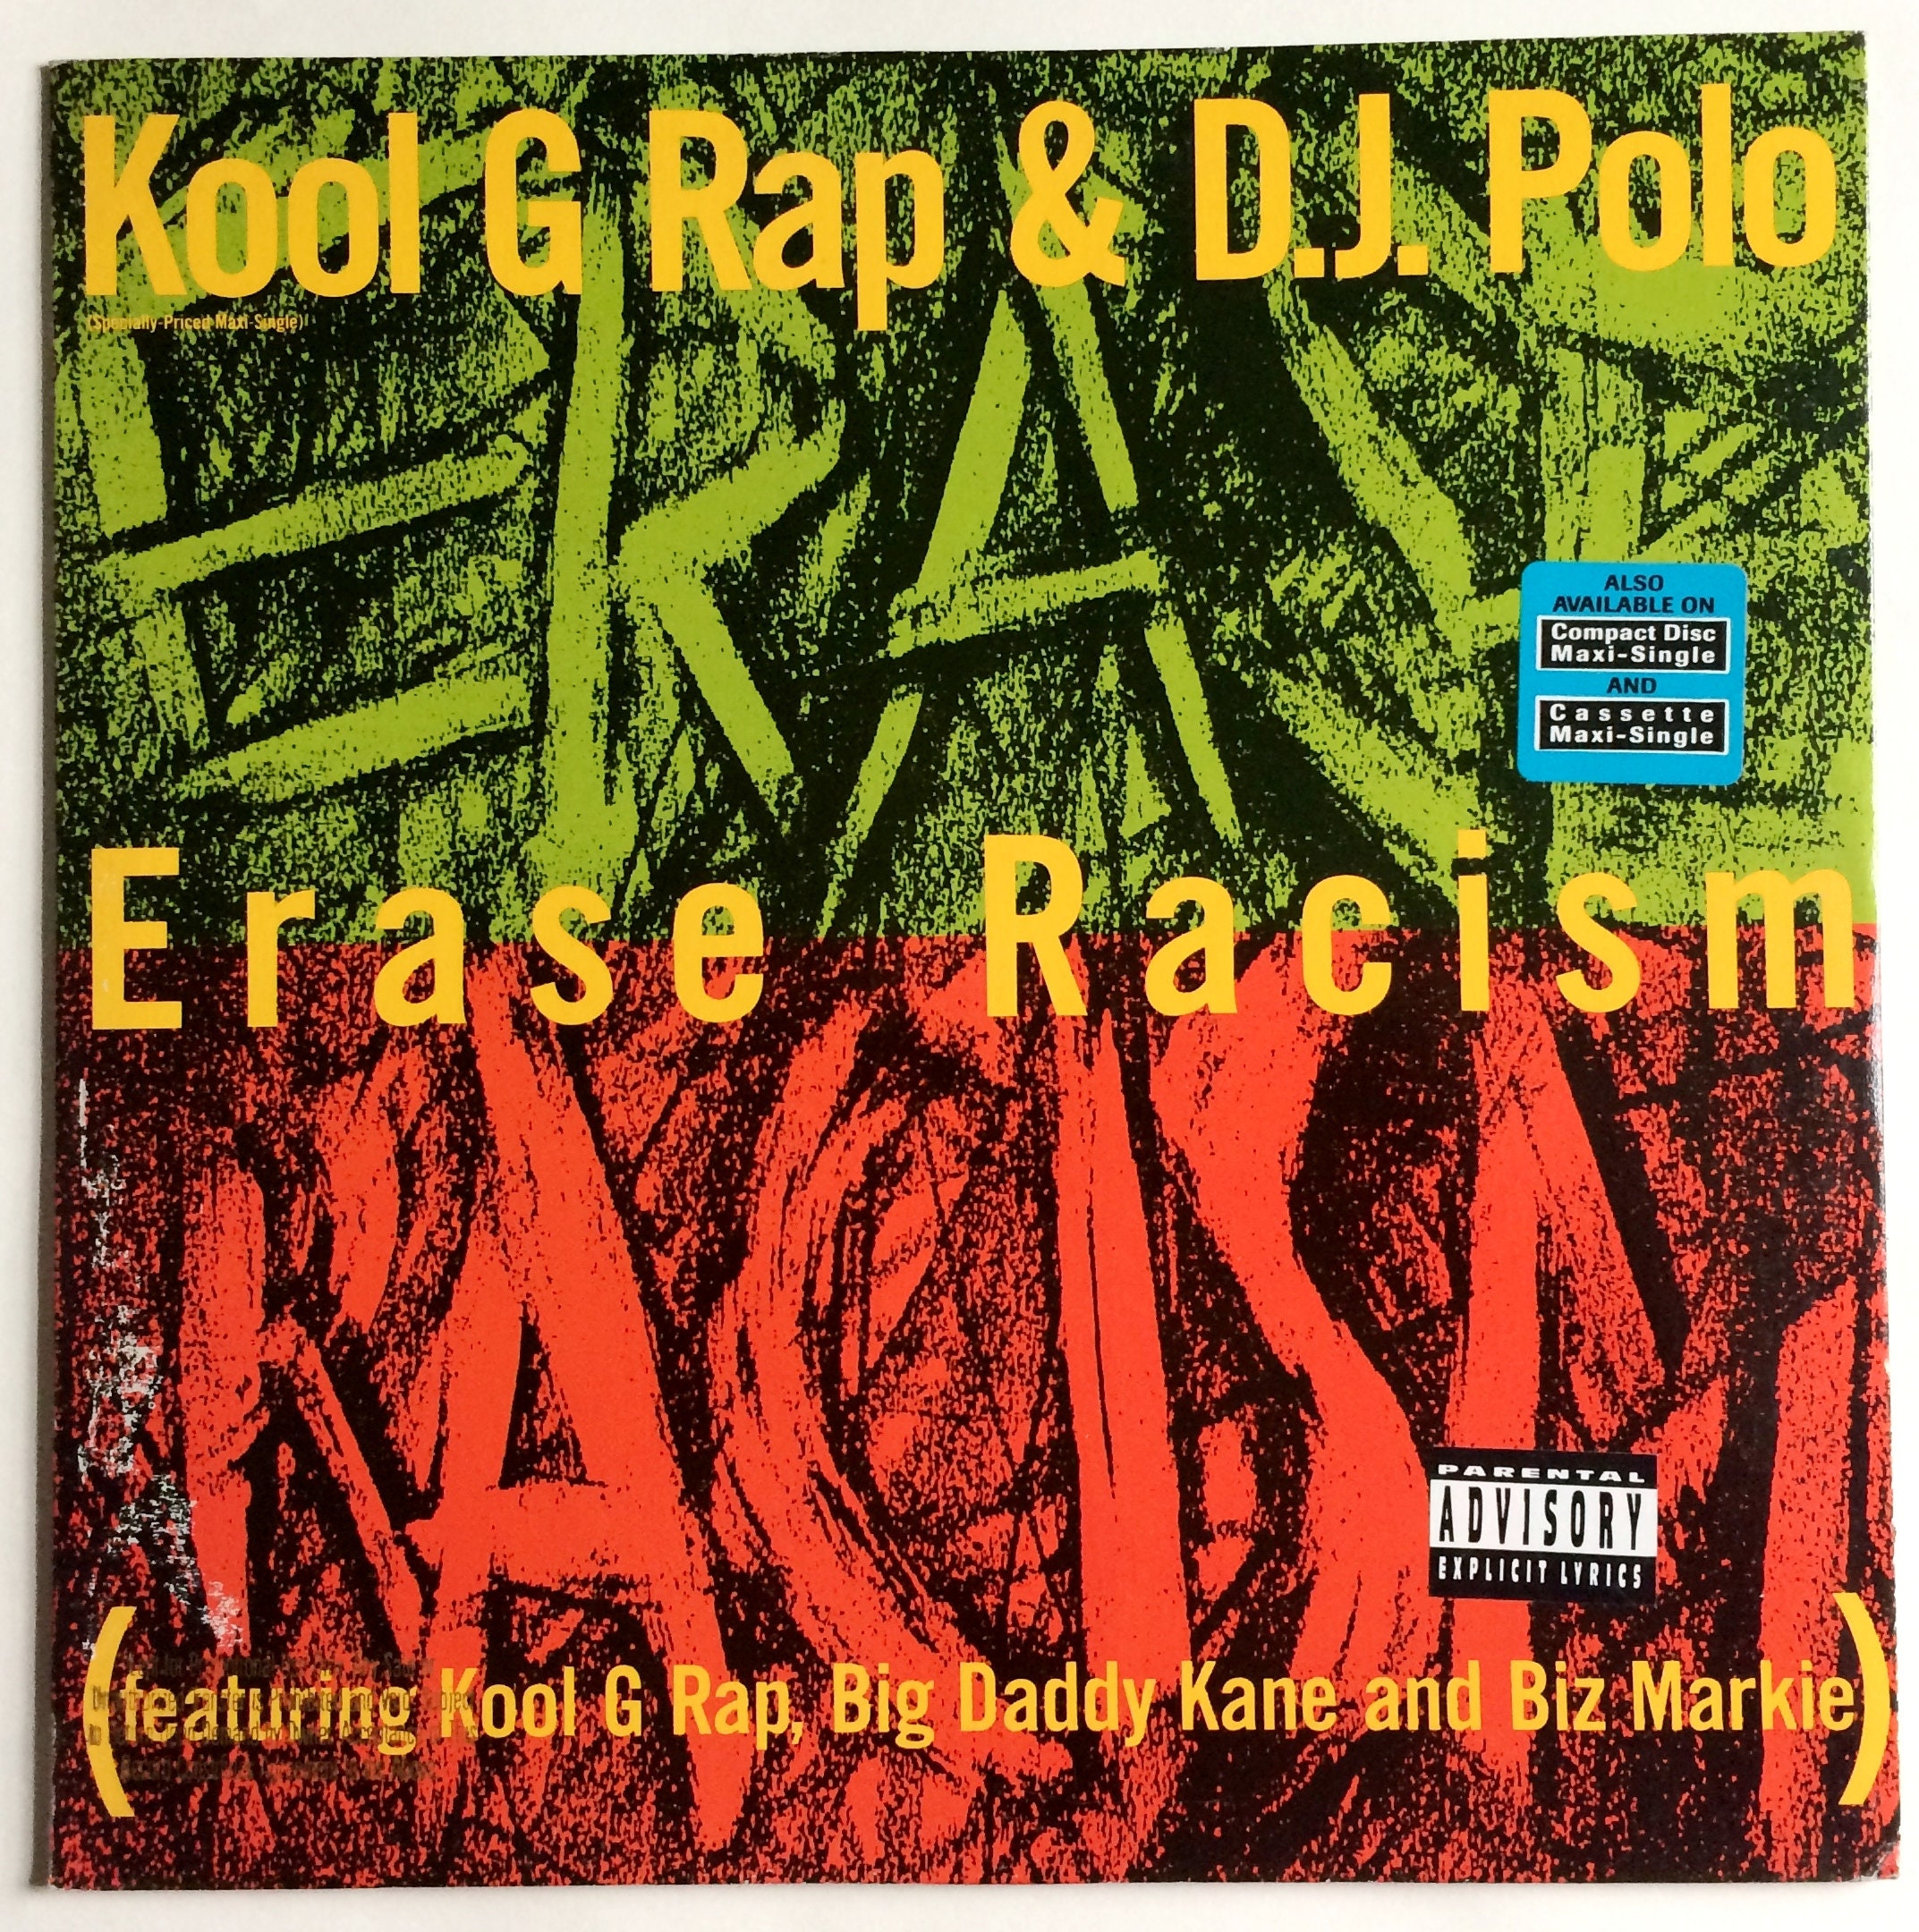 KOOL G RAP & Dj POLO Erase Racism 12 Inch Single 1990 - Etsy